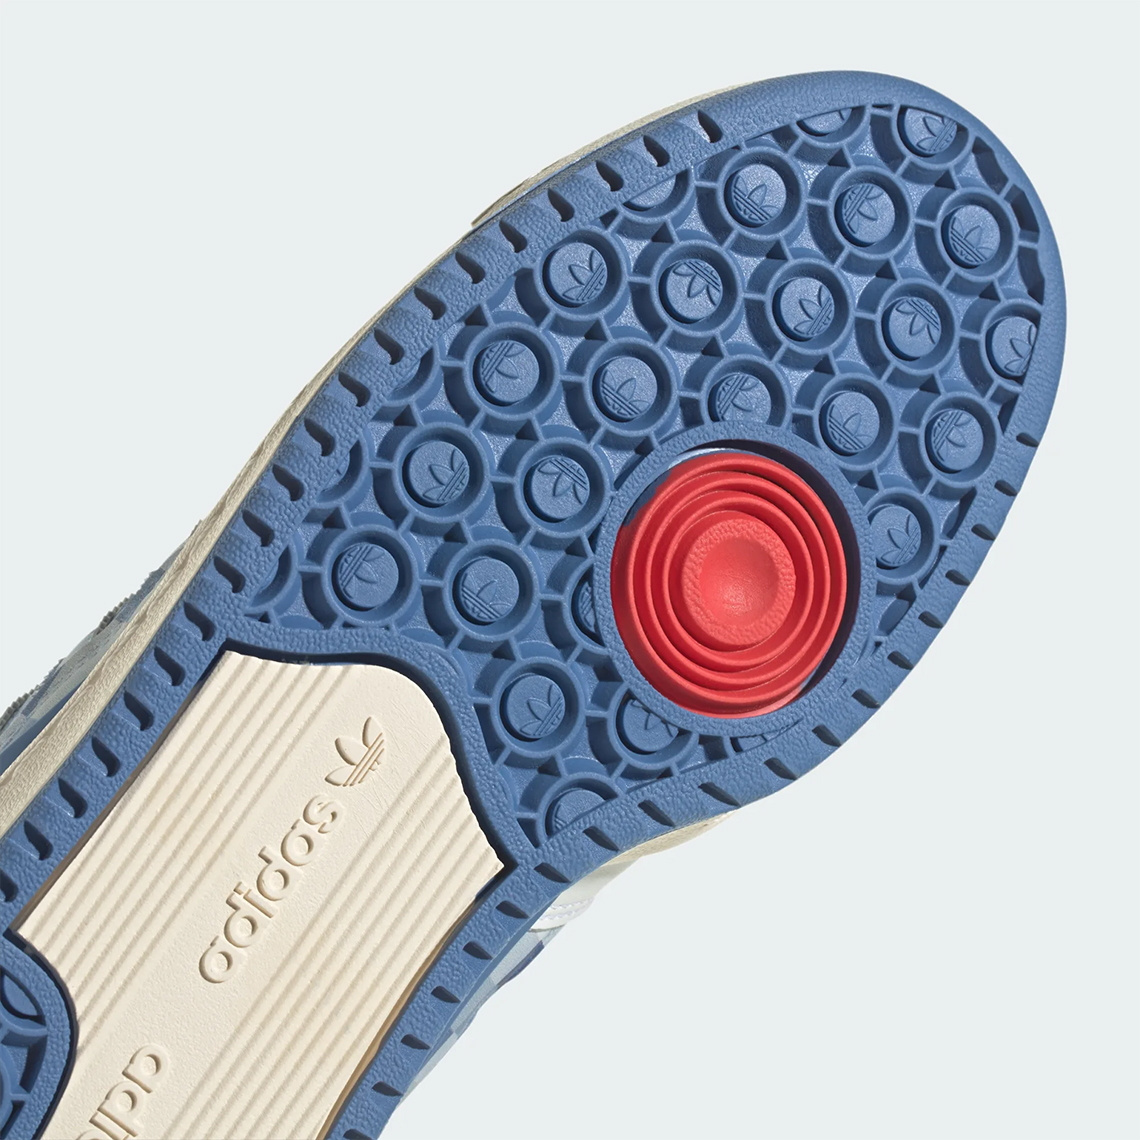 adidas-forum-hi-closer-look-pixelated-id7440-4.jpg